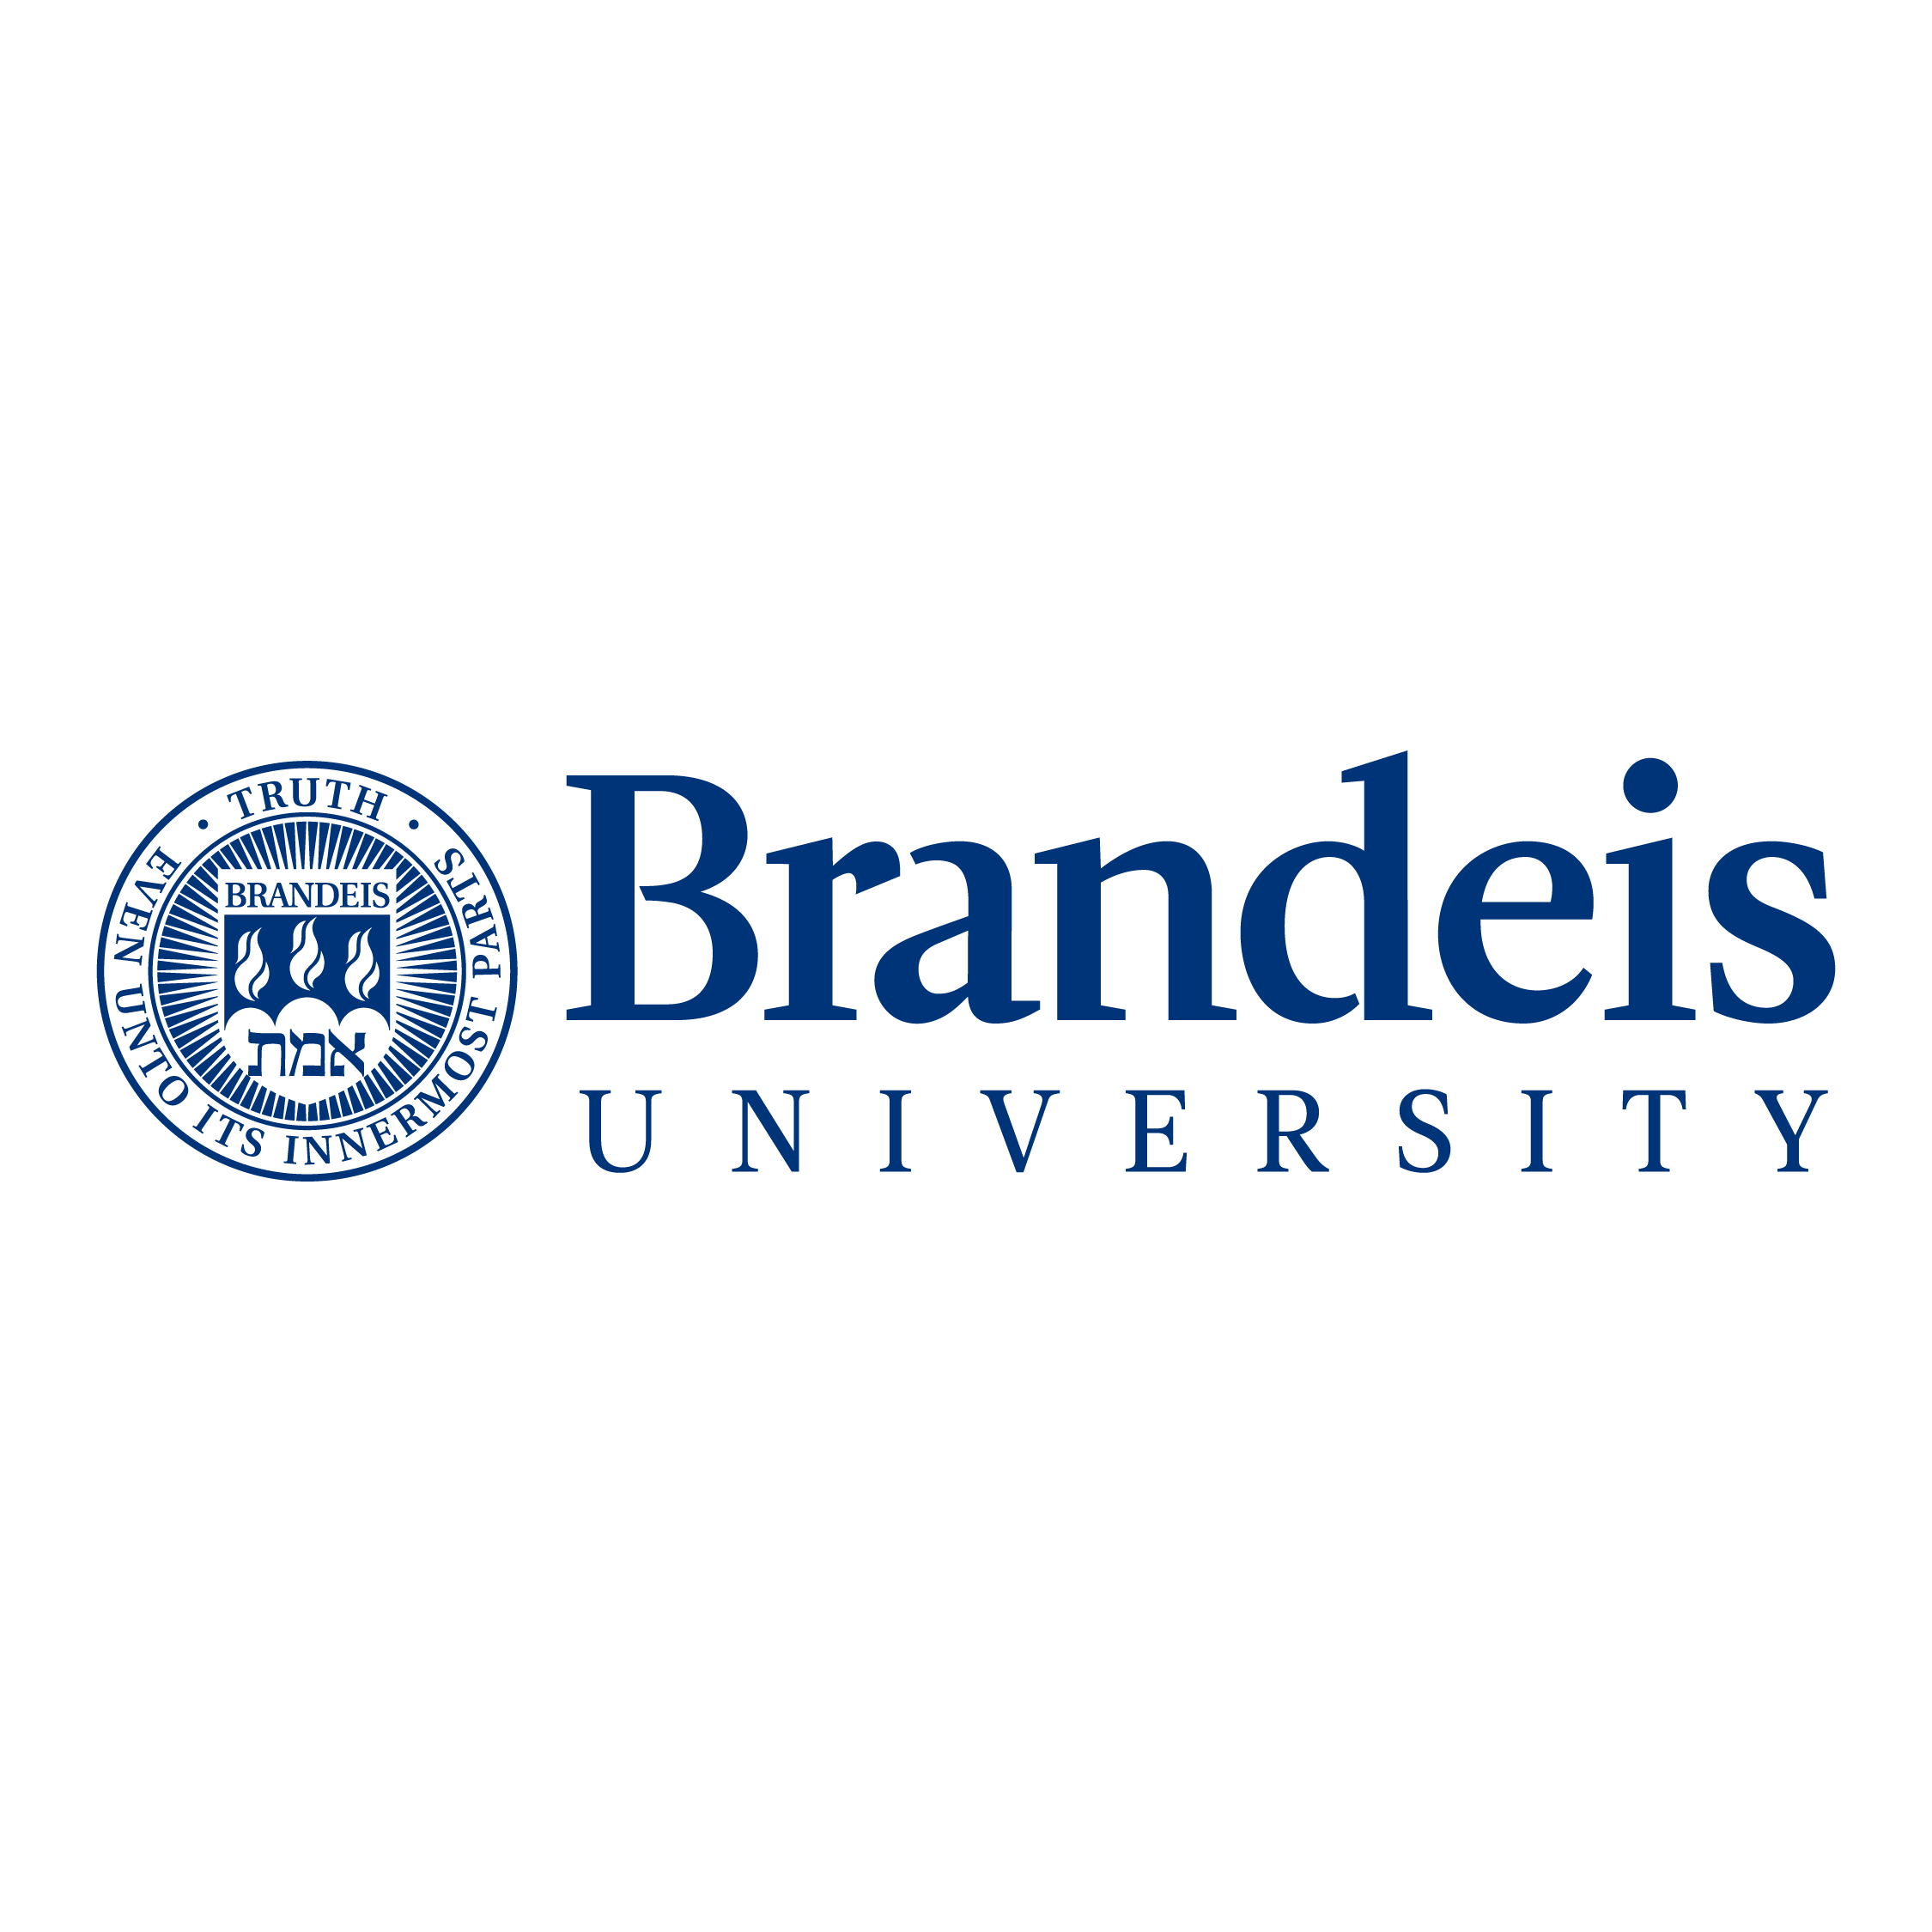 Brandeis University website